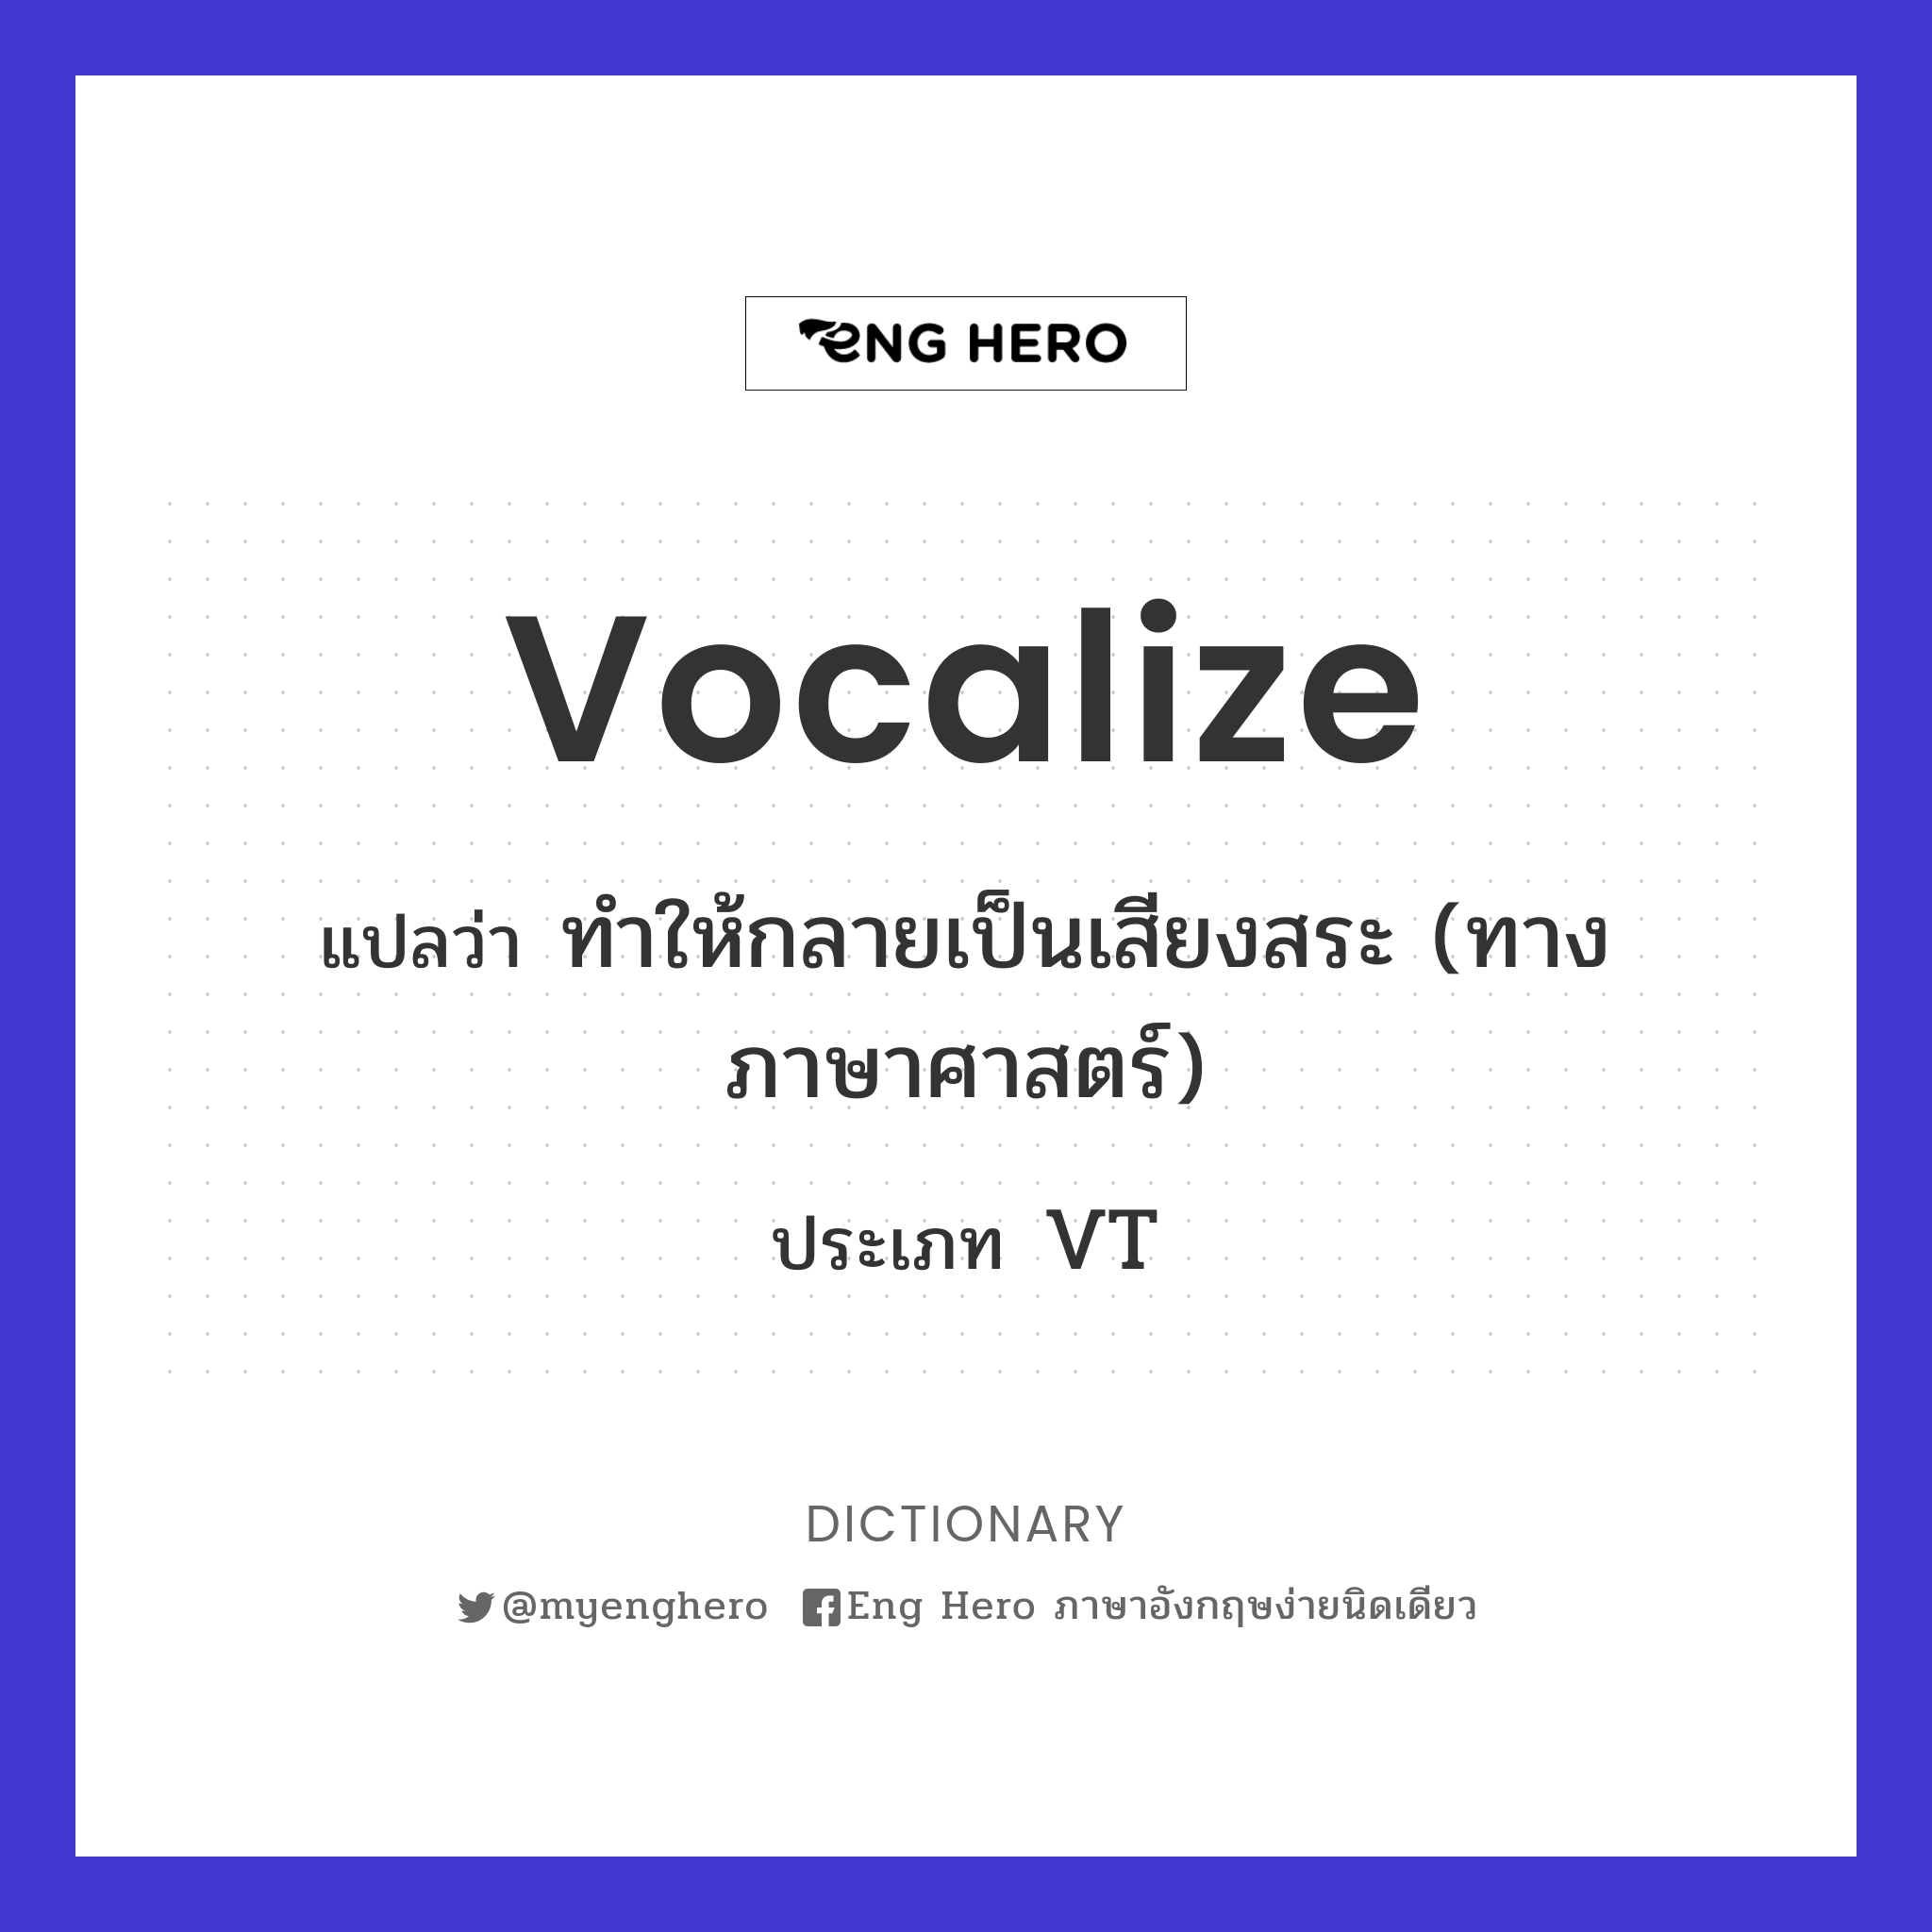 vocalize